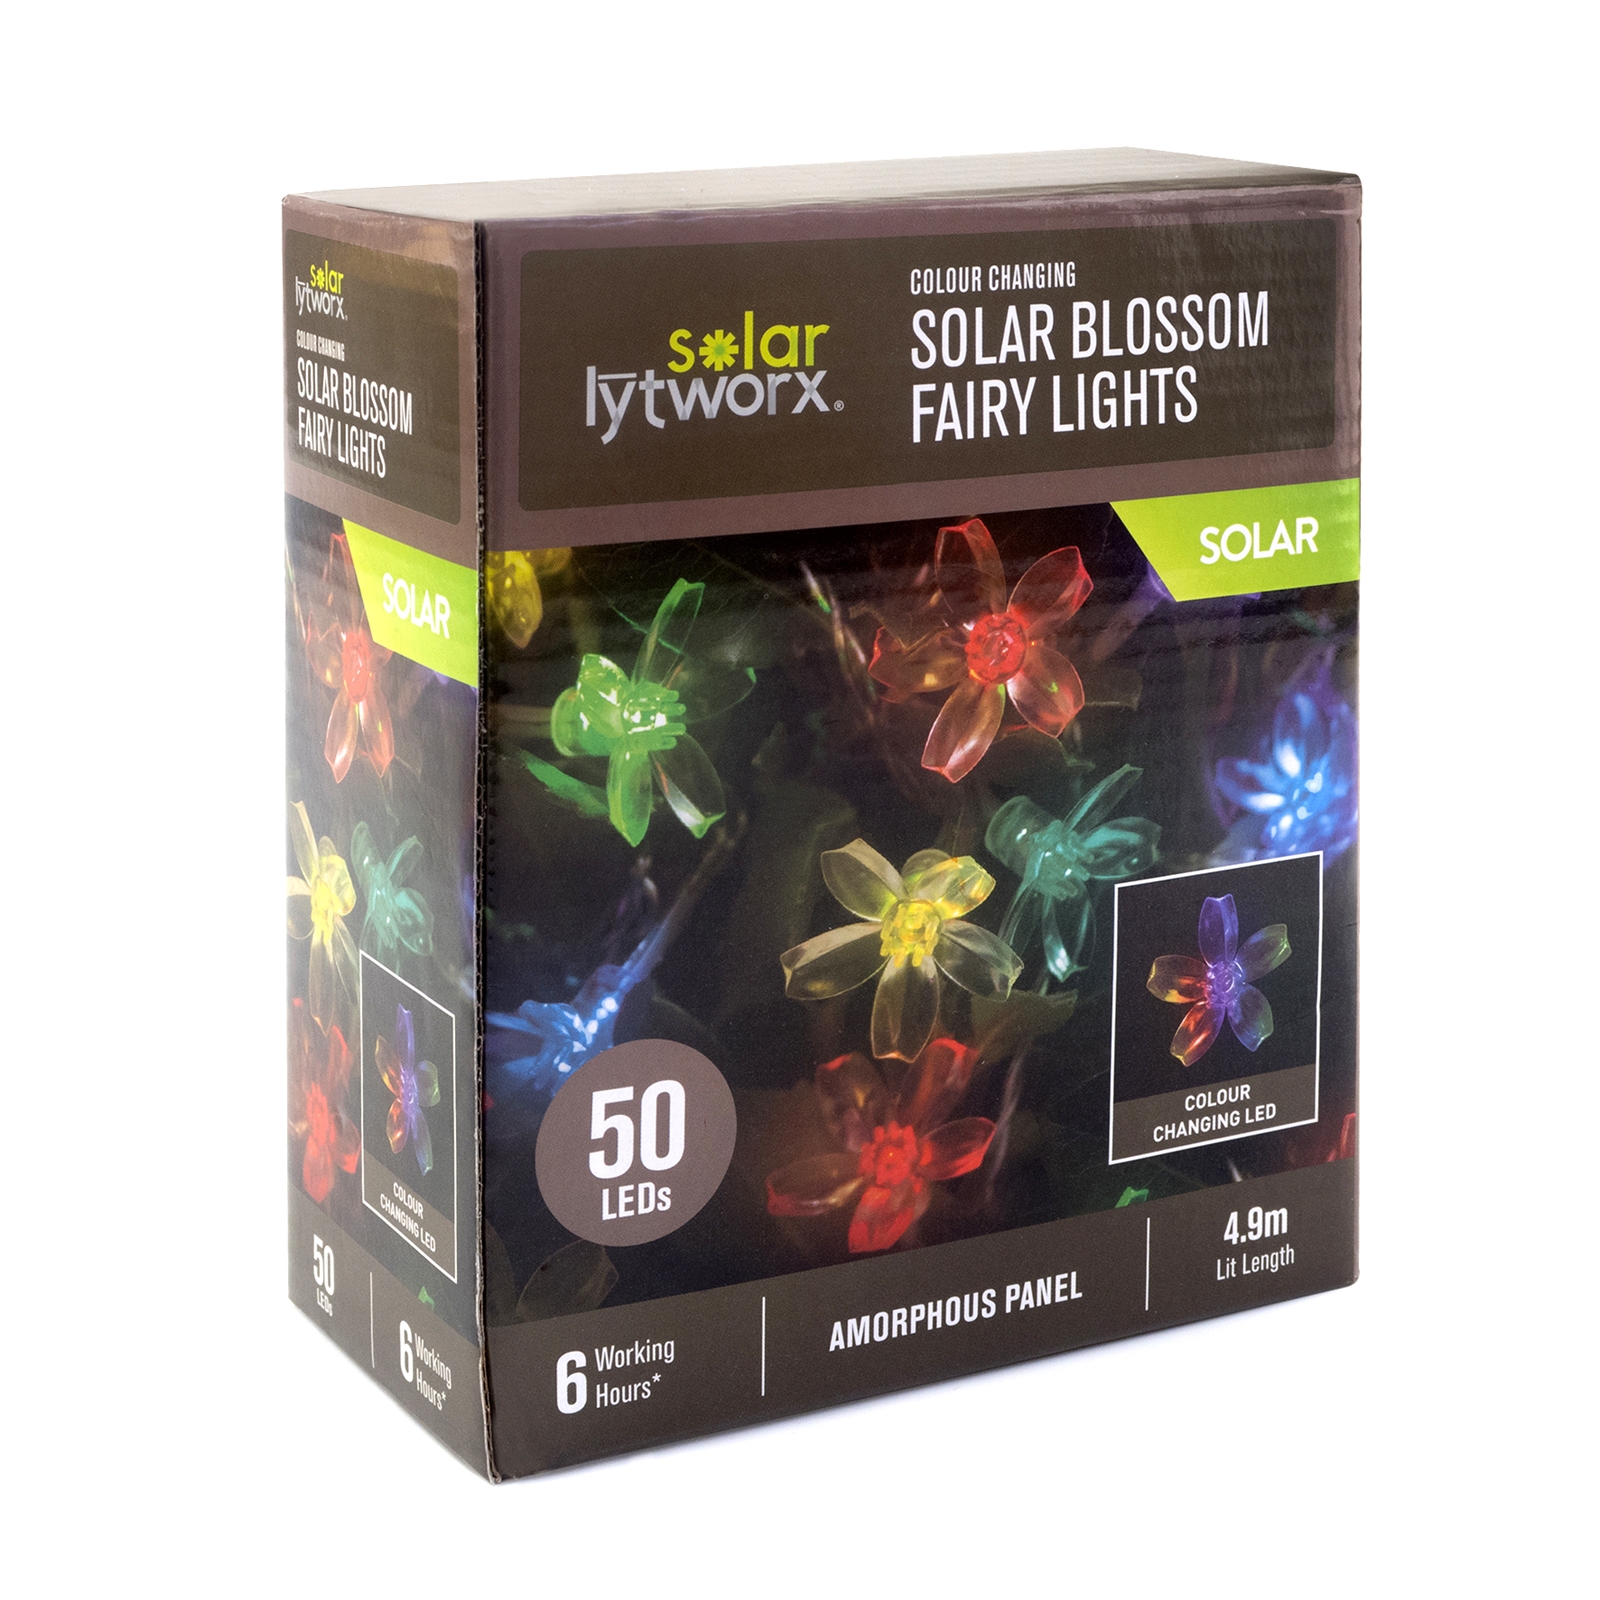 Lytworx 50 Colour Changing LED Solar Fairy Light Blossom